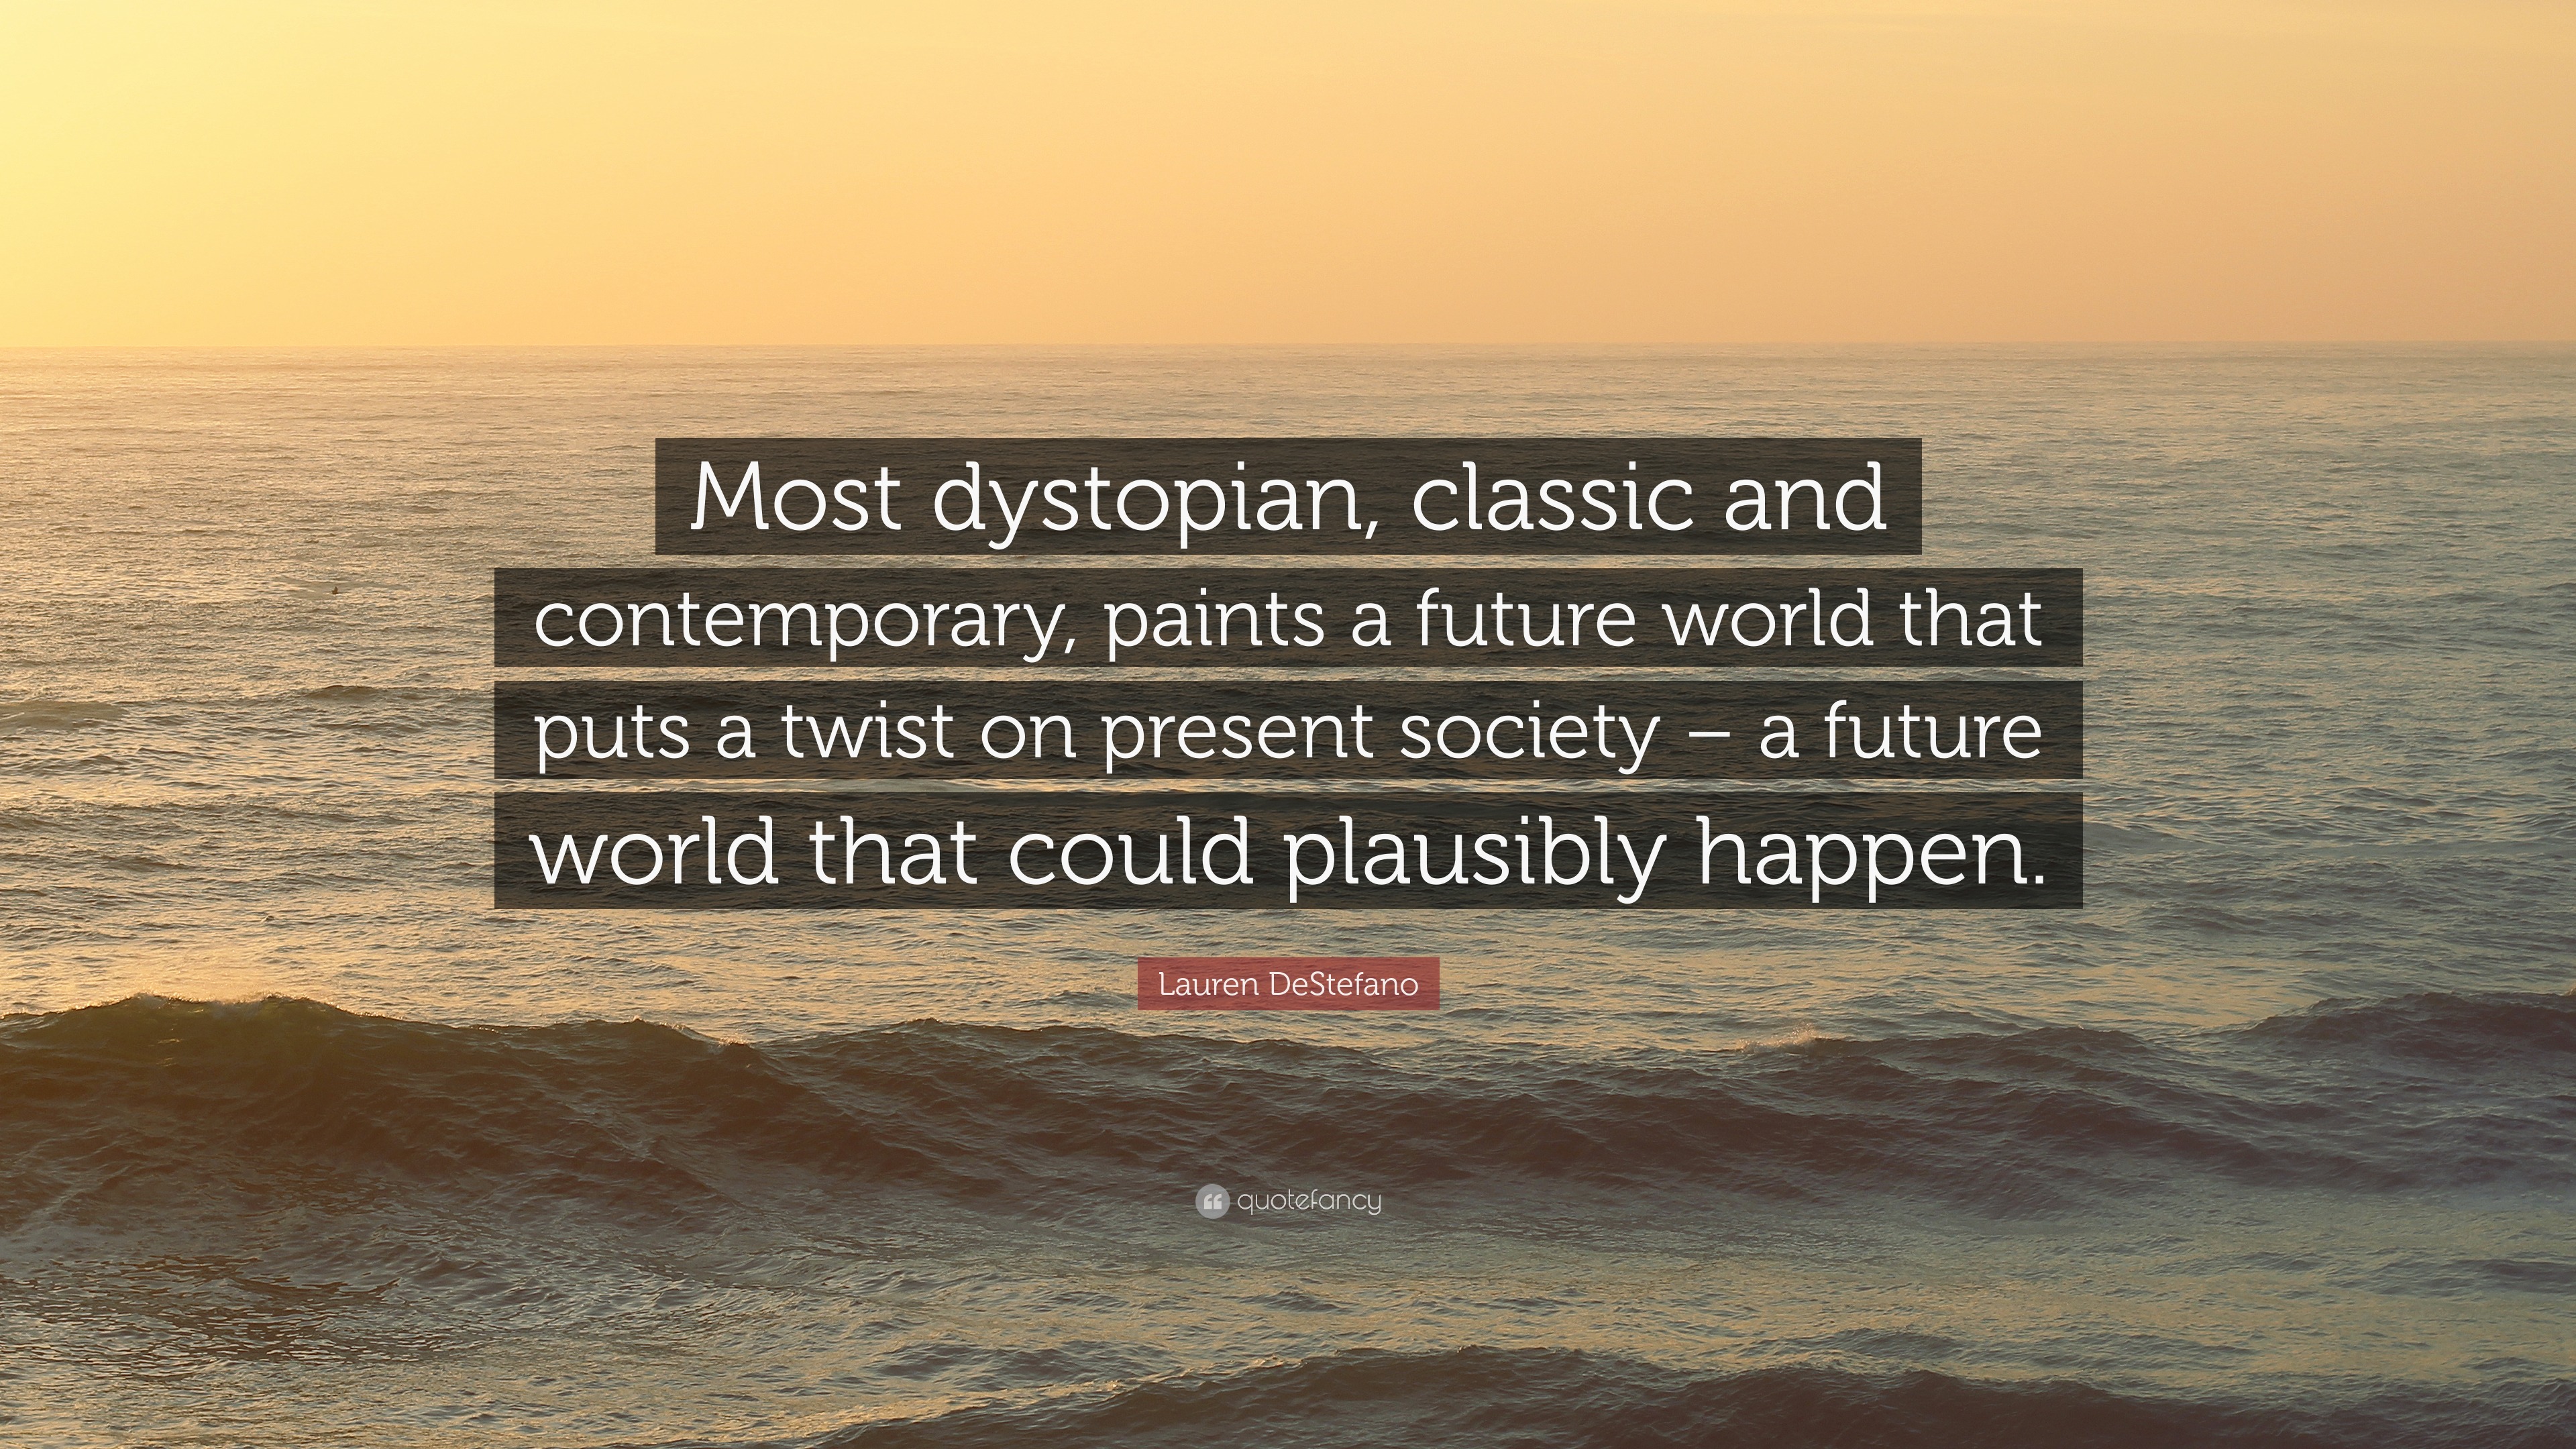 Lauren DeStefano Quote: "Most dystopian, classic and contemporary, paints a future world that ...